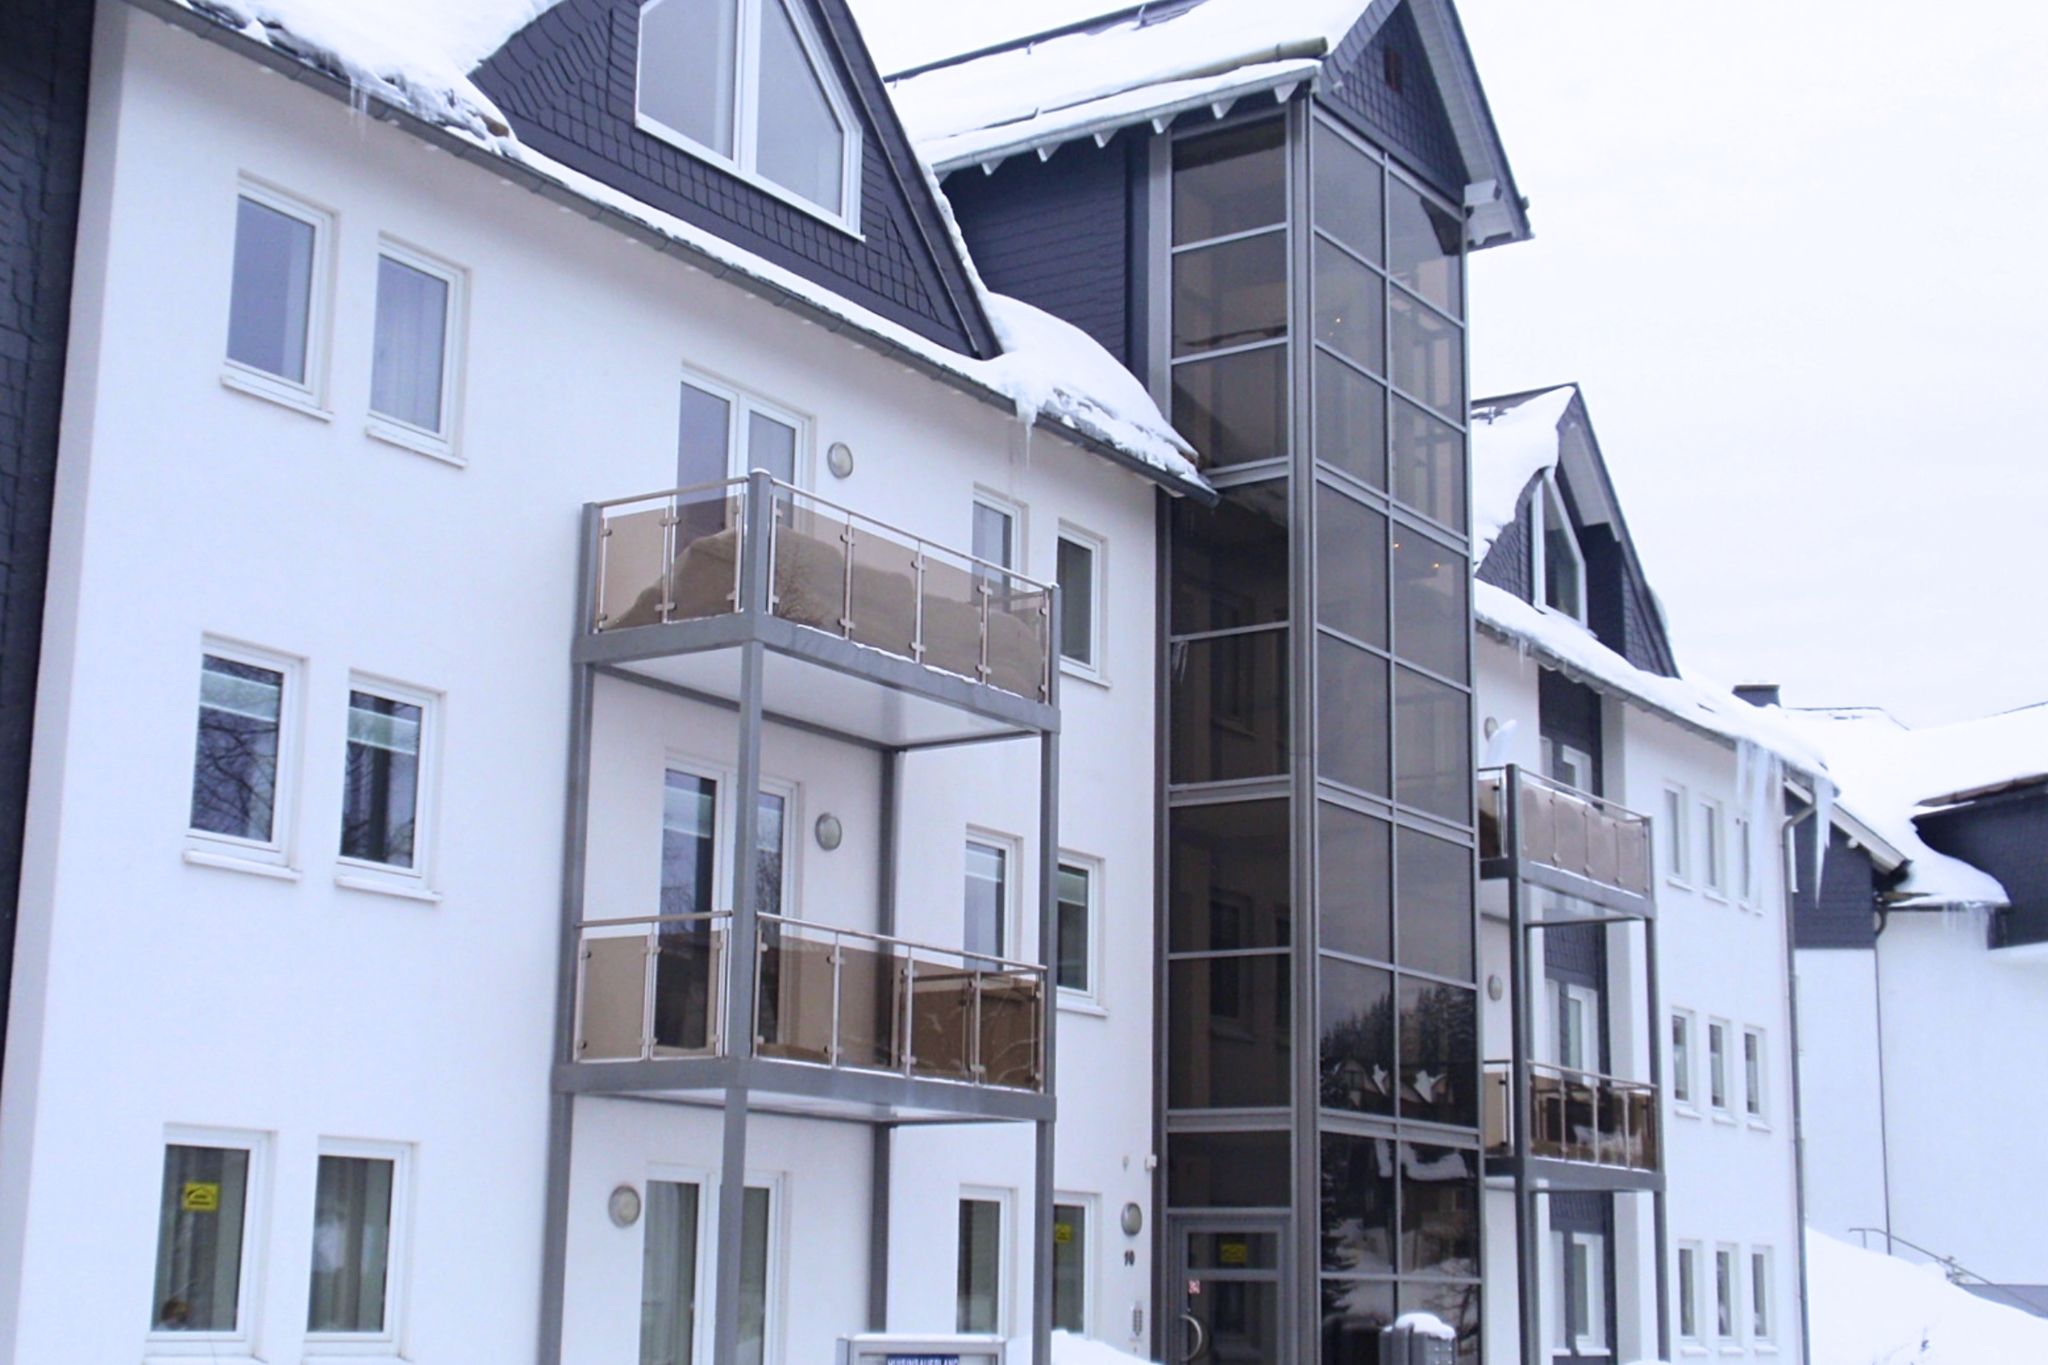 Mooi, modern appartement met eigen terras in Winterberg